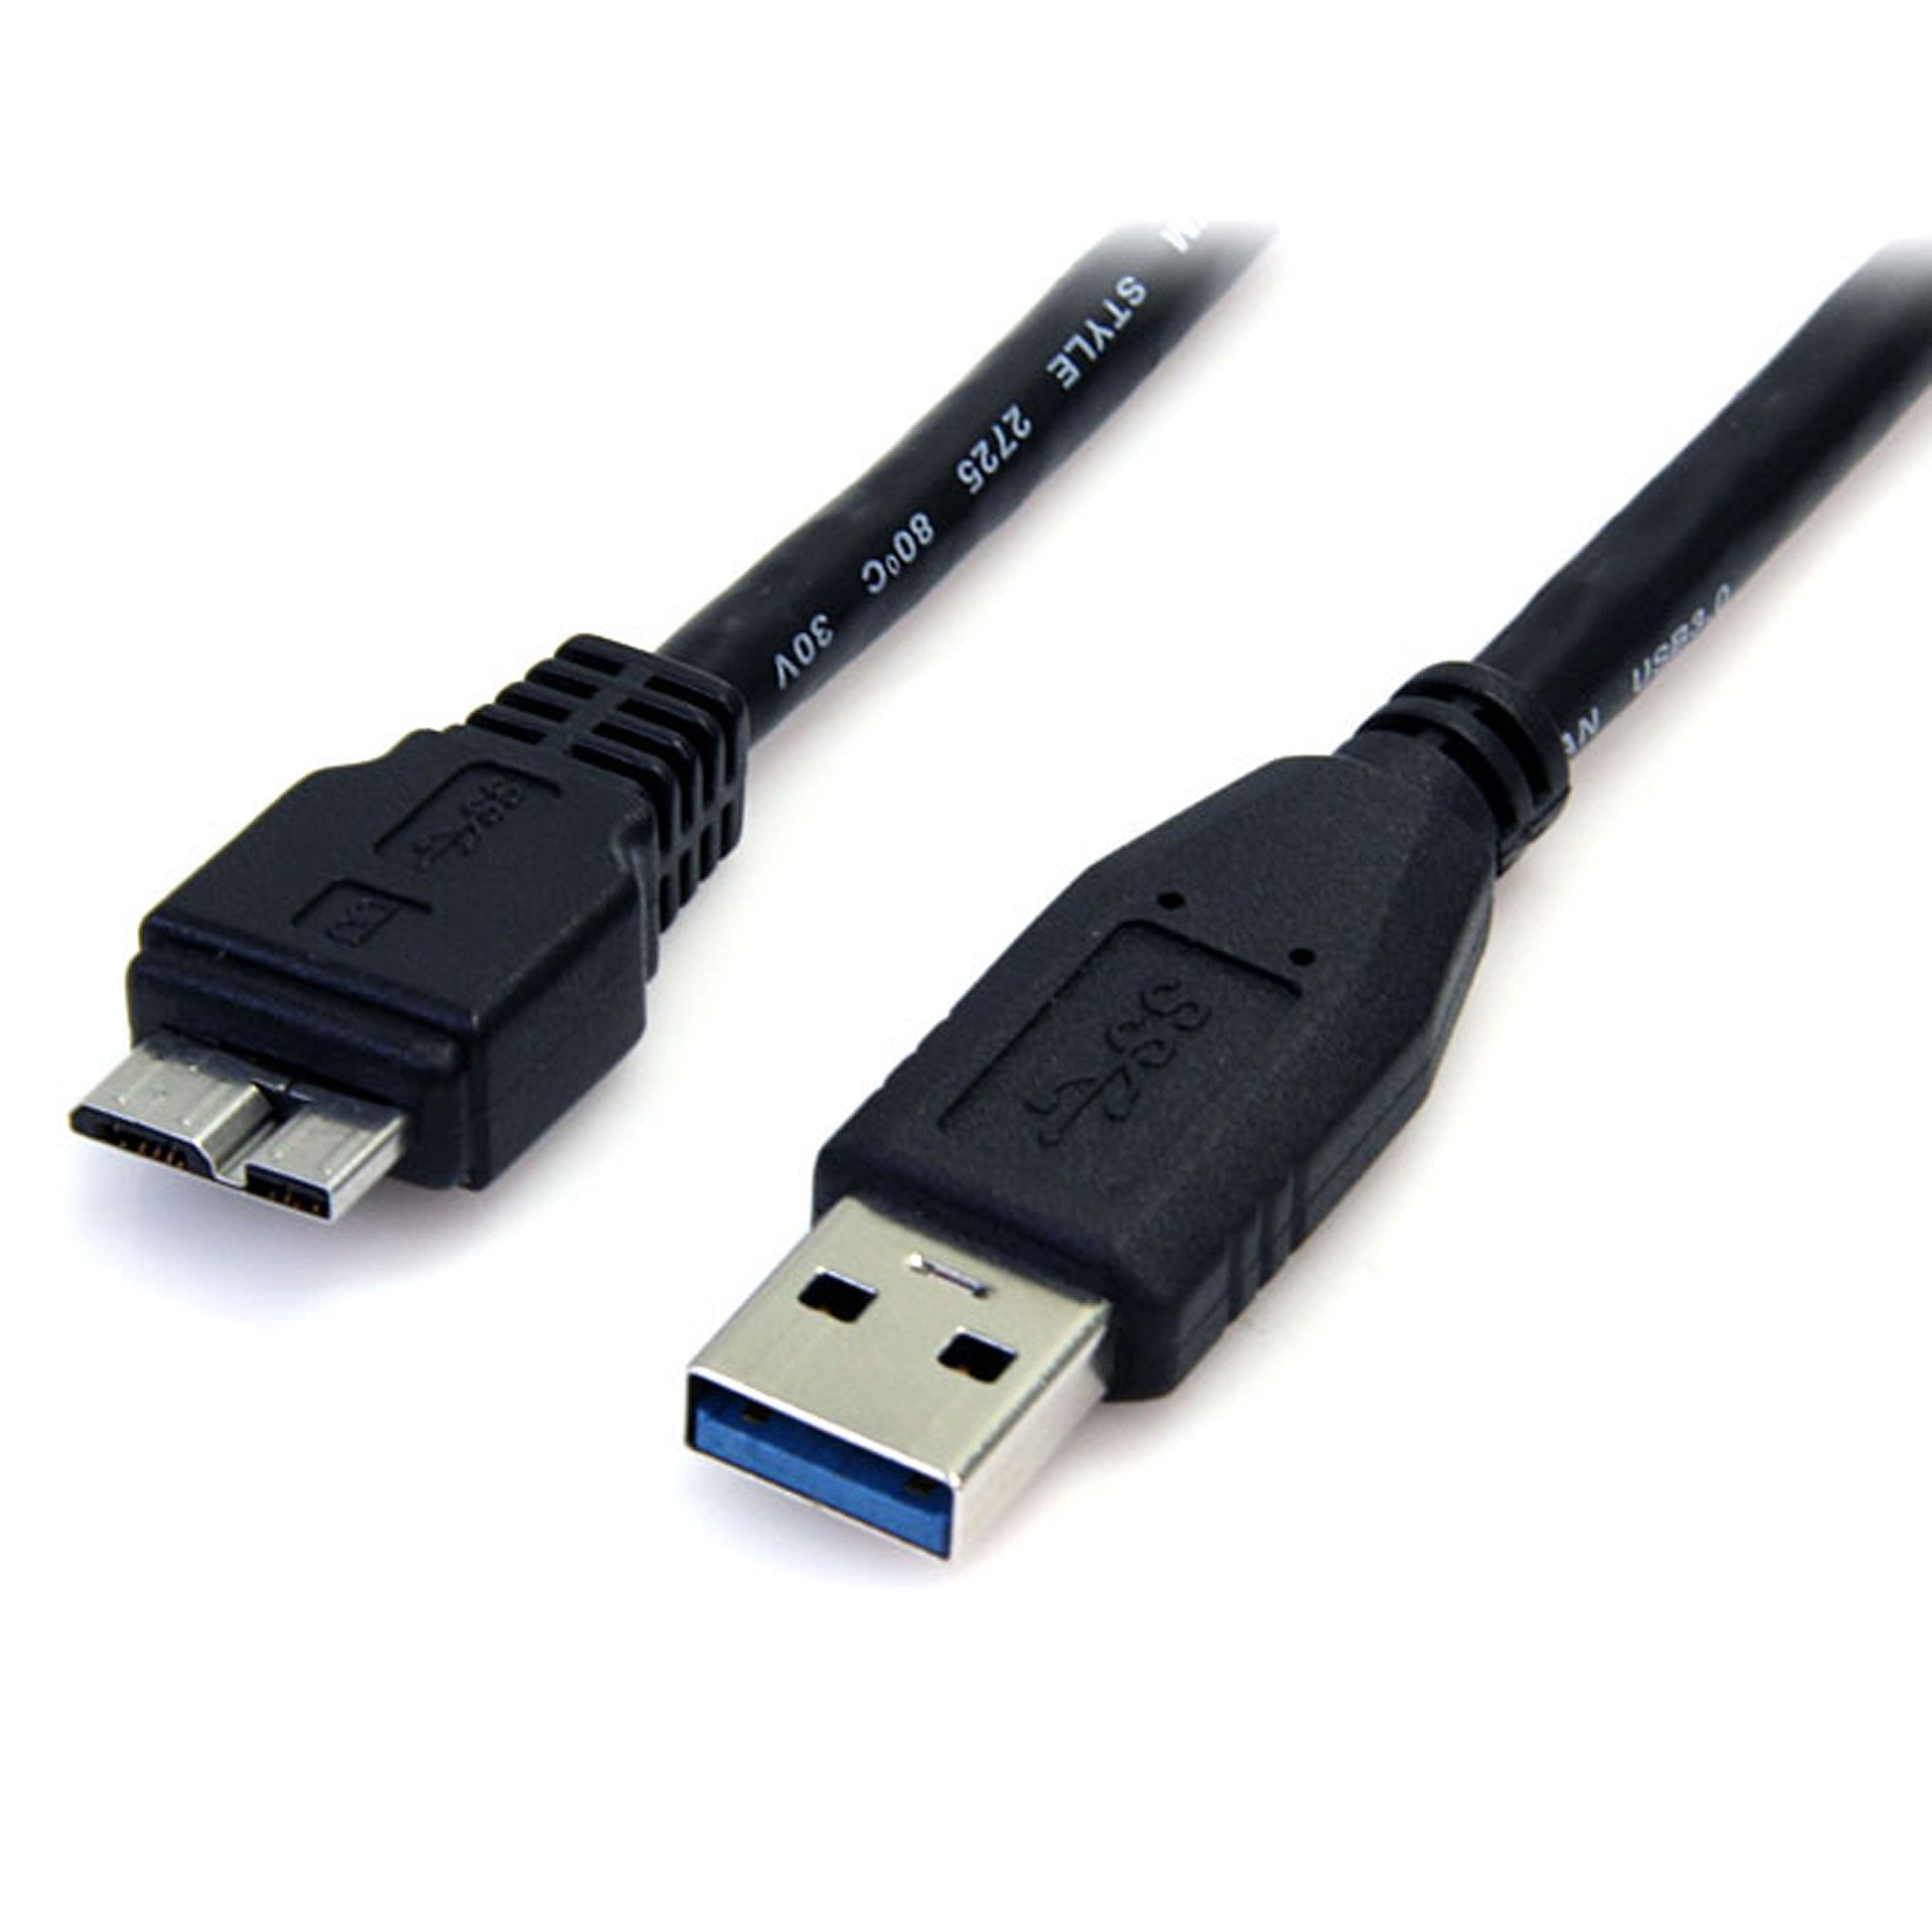 0.5m 1.5ft Black USB 3.0 Micro B Cable - USB Cables | StarTech.com